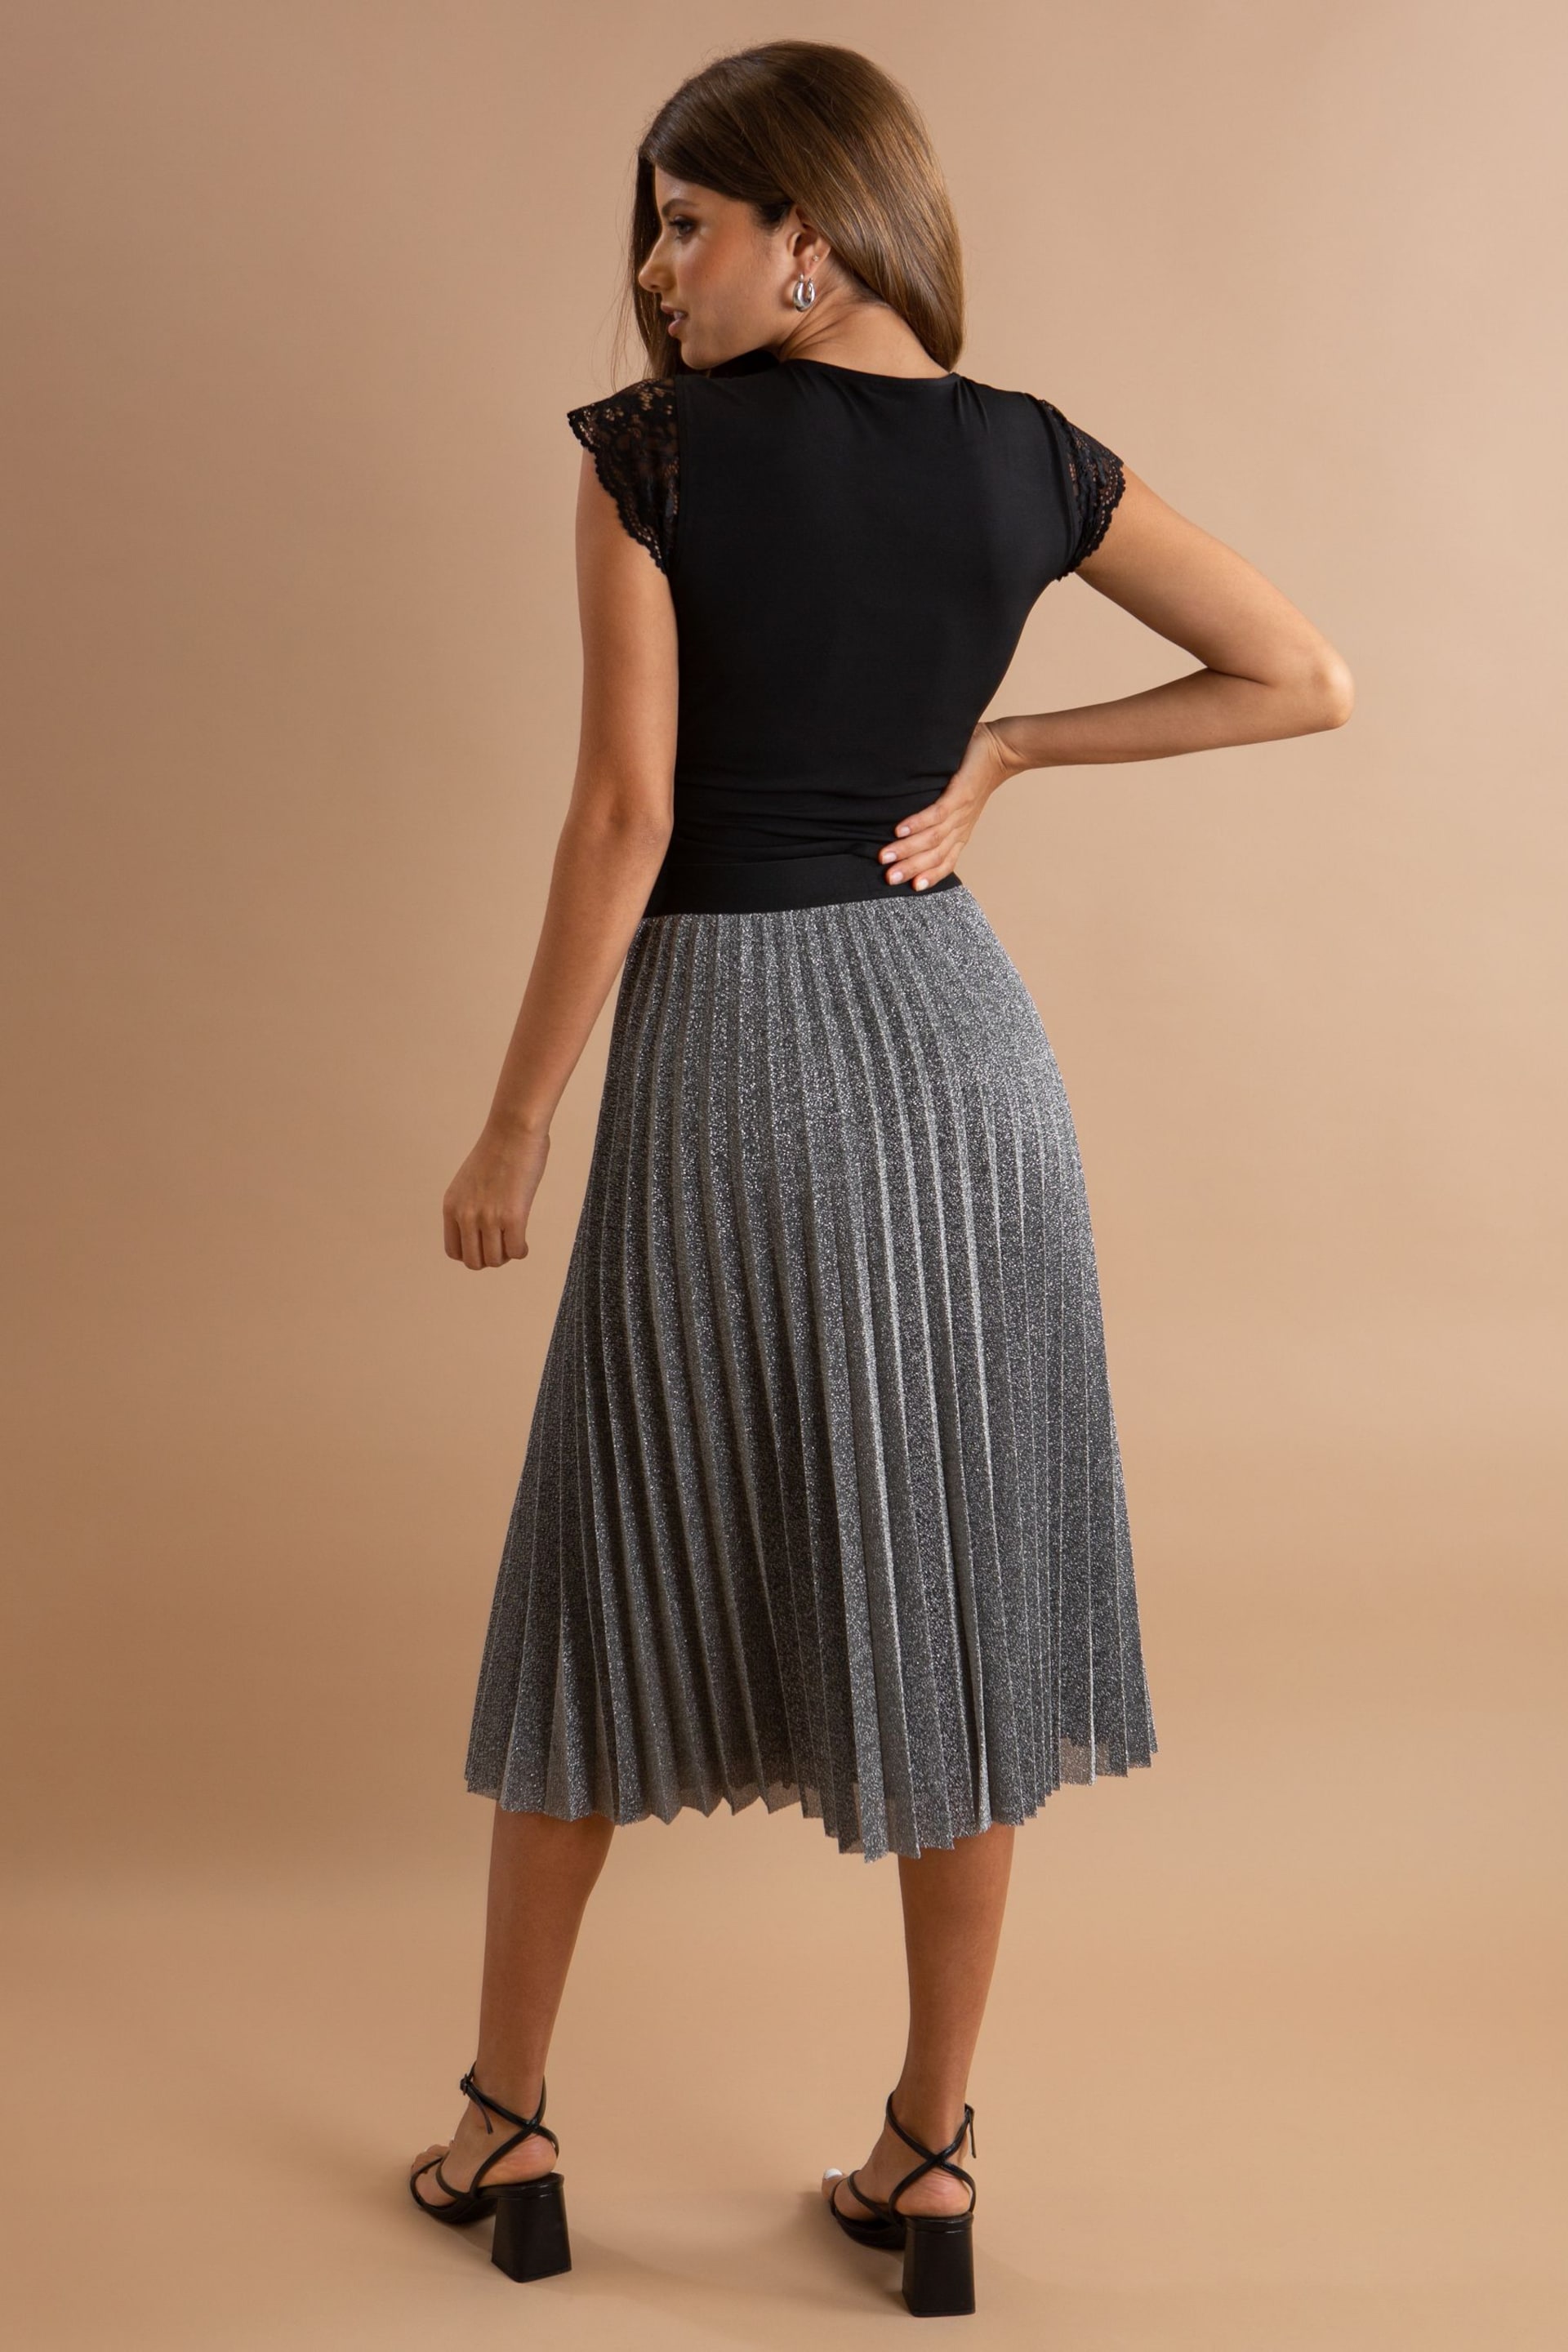 Pour Moi Silver Nina Lame Pleated Midi Skirt - Image 2 of 5